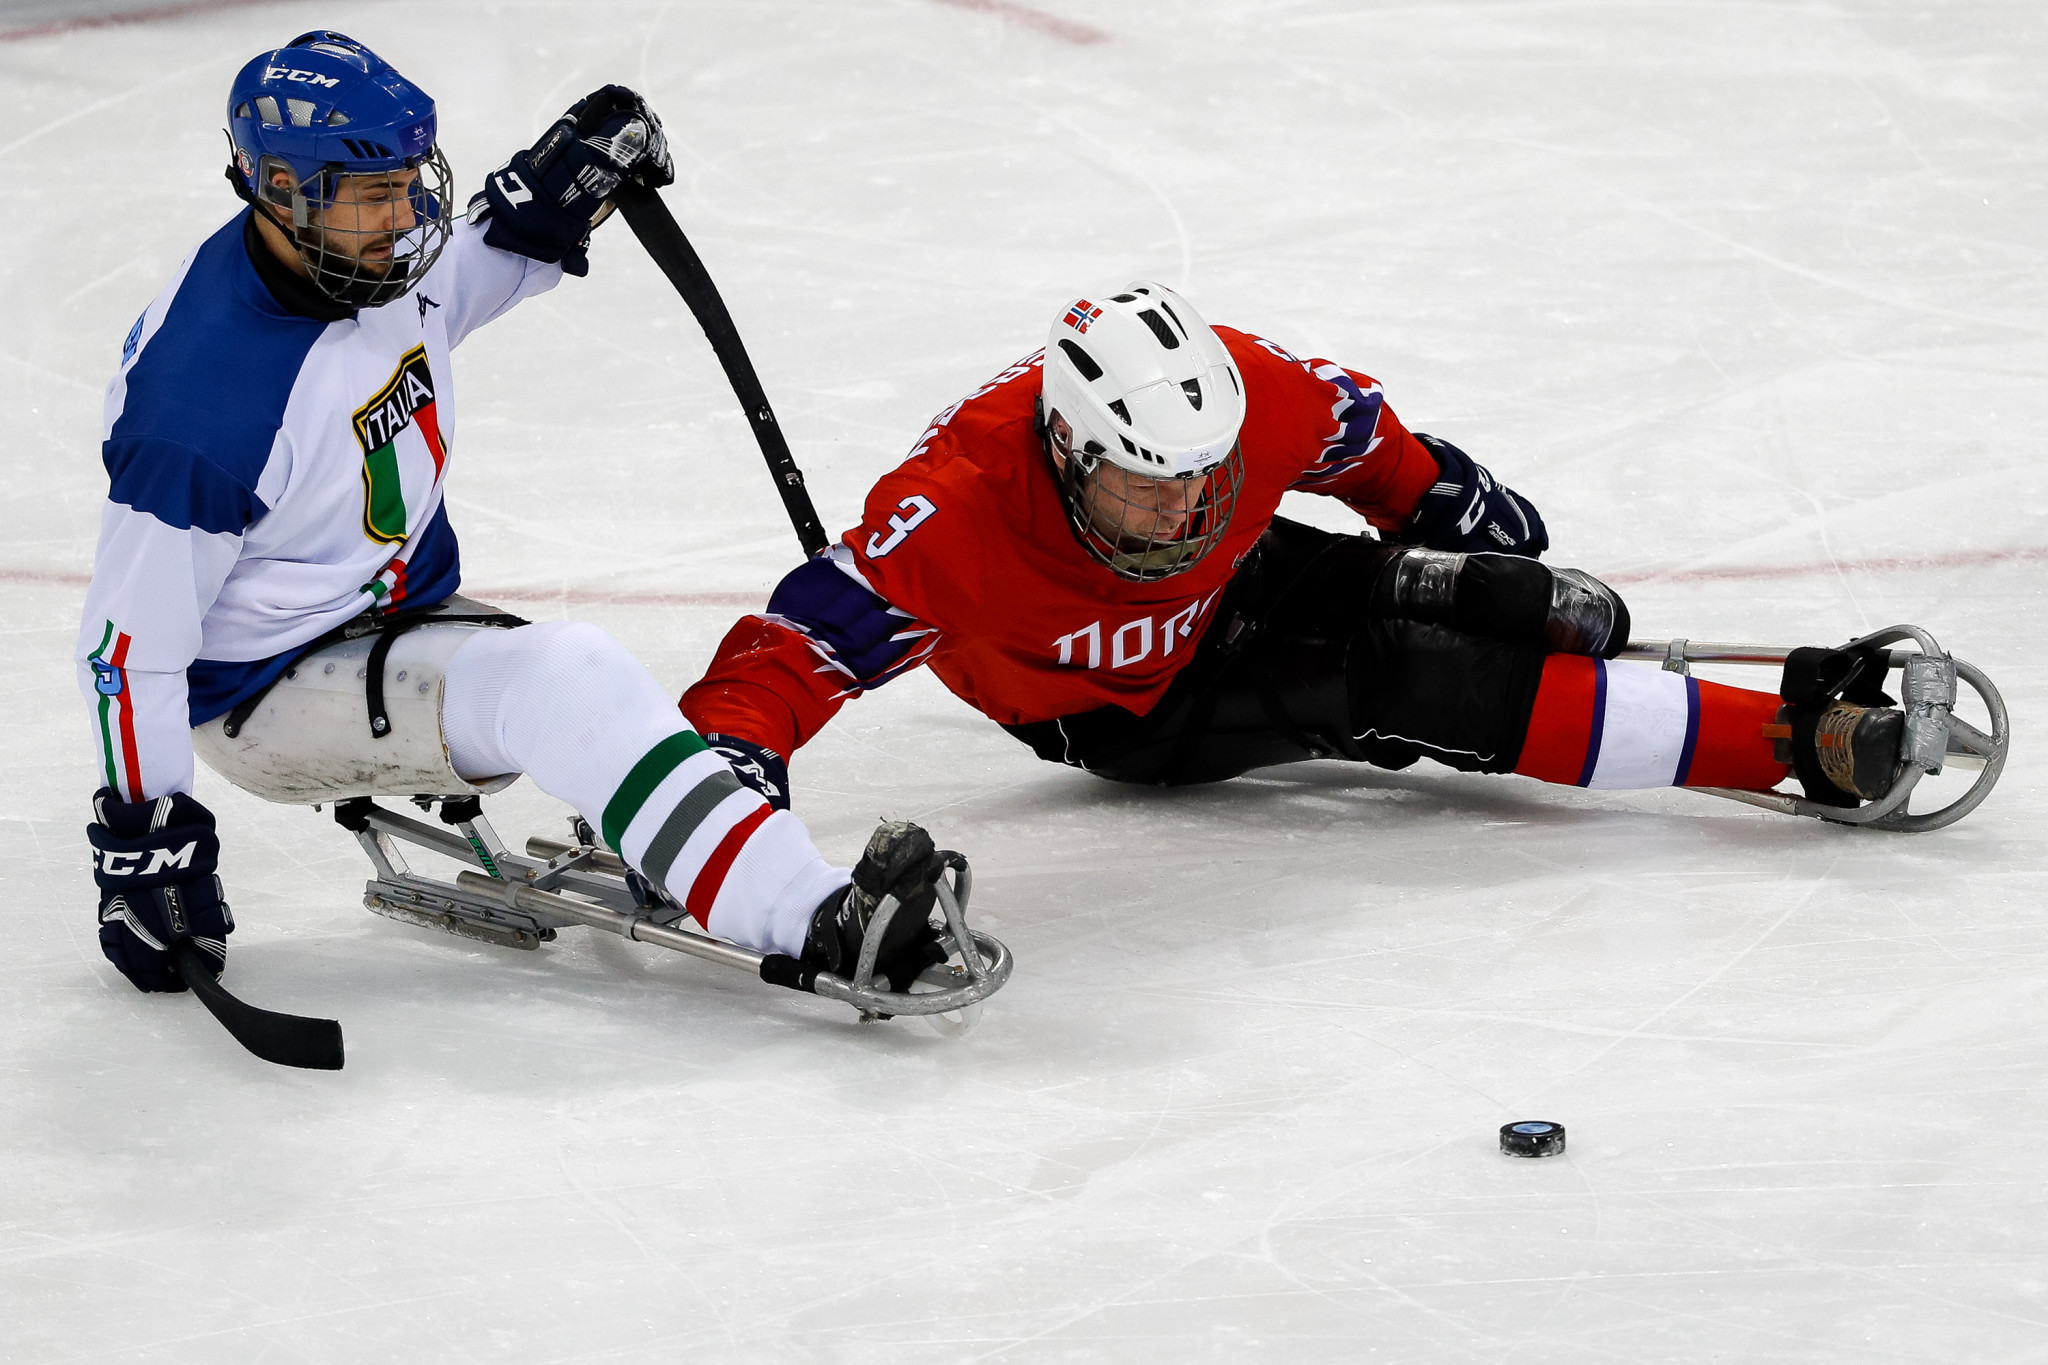 Italian Para ice hockey player given two-year ban for failed test at Pyeongchang 2018 Paralympics